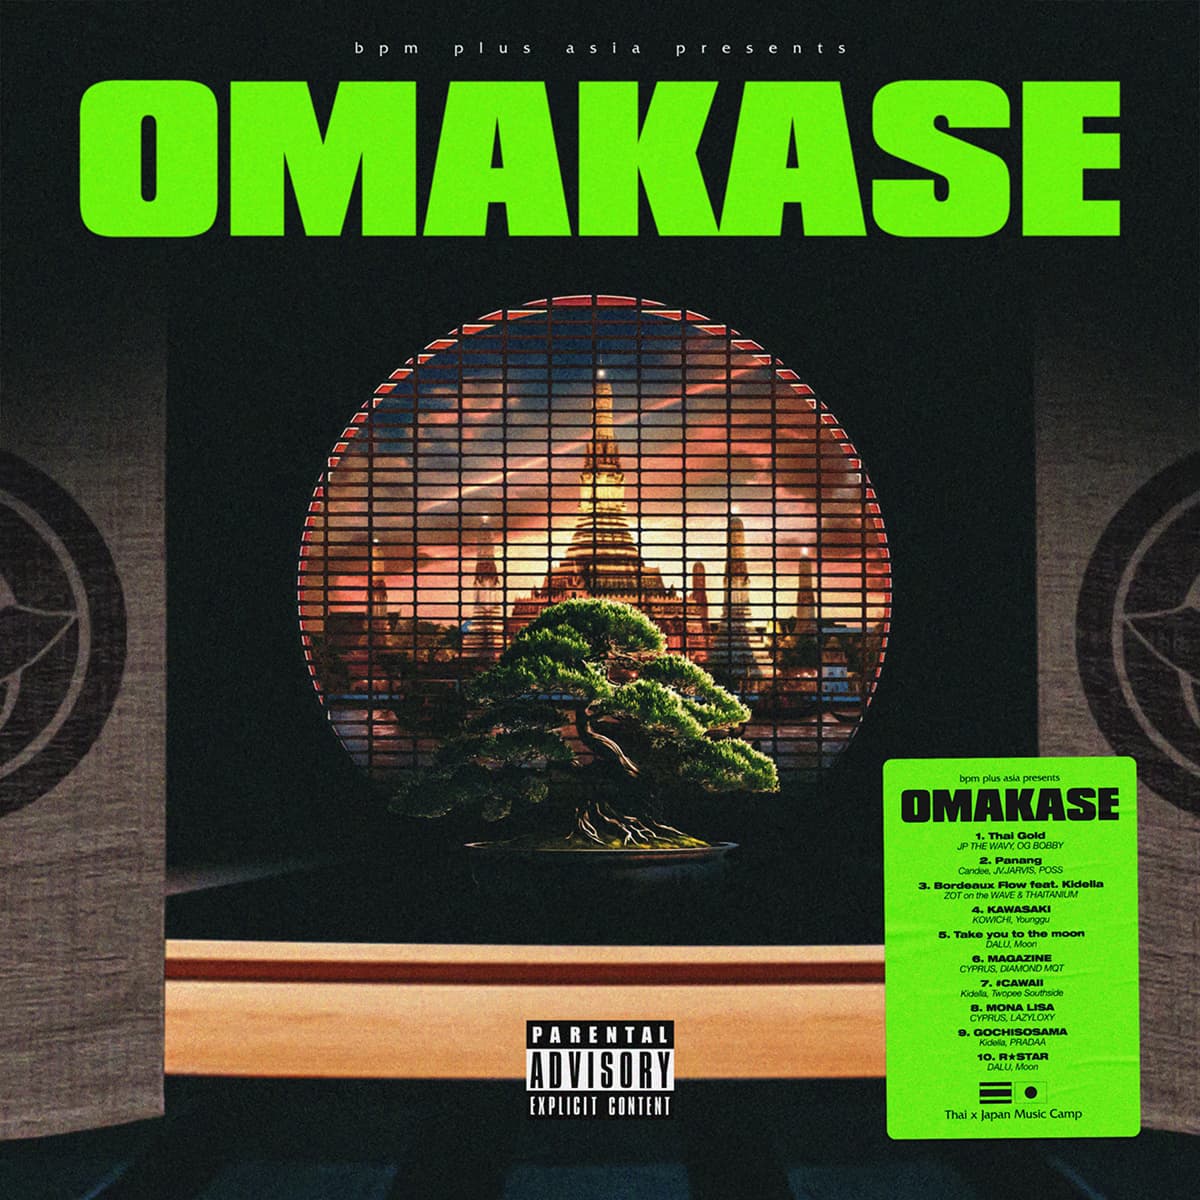 Thai×Japan Music Camp集大成 コンピアルバム ”OMAKASE” を9月22日にリリース！
また、制作風景を収めたショート・ムービーも公開！